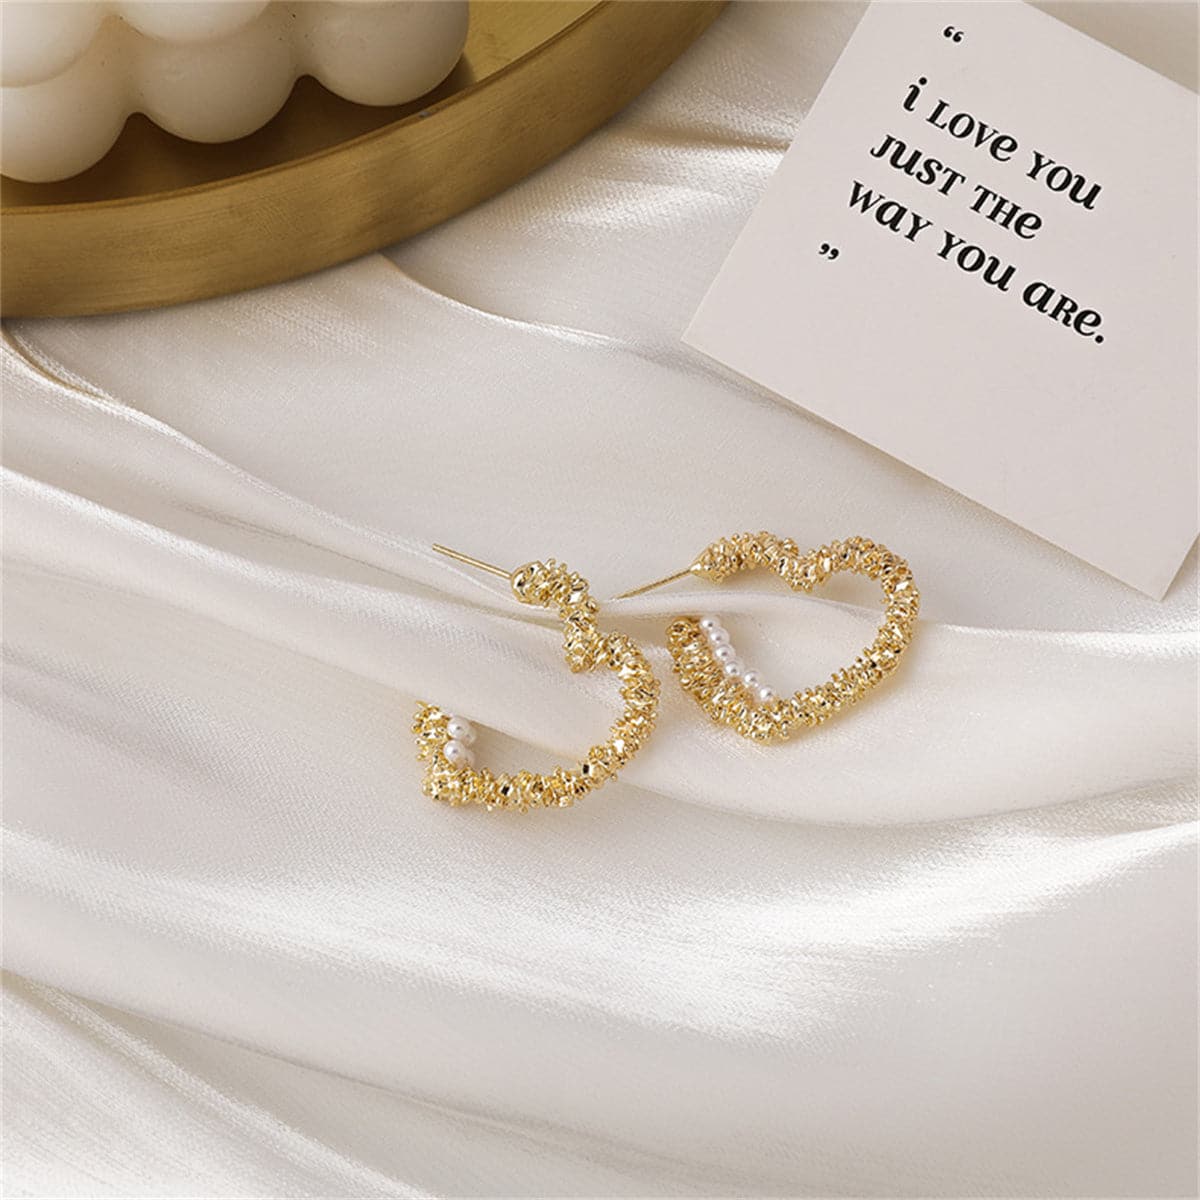 Pearl & 18K Gold-Plated Textured Heart Huggie Earrings